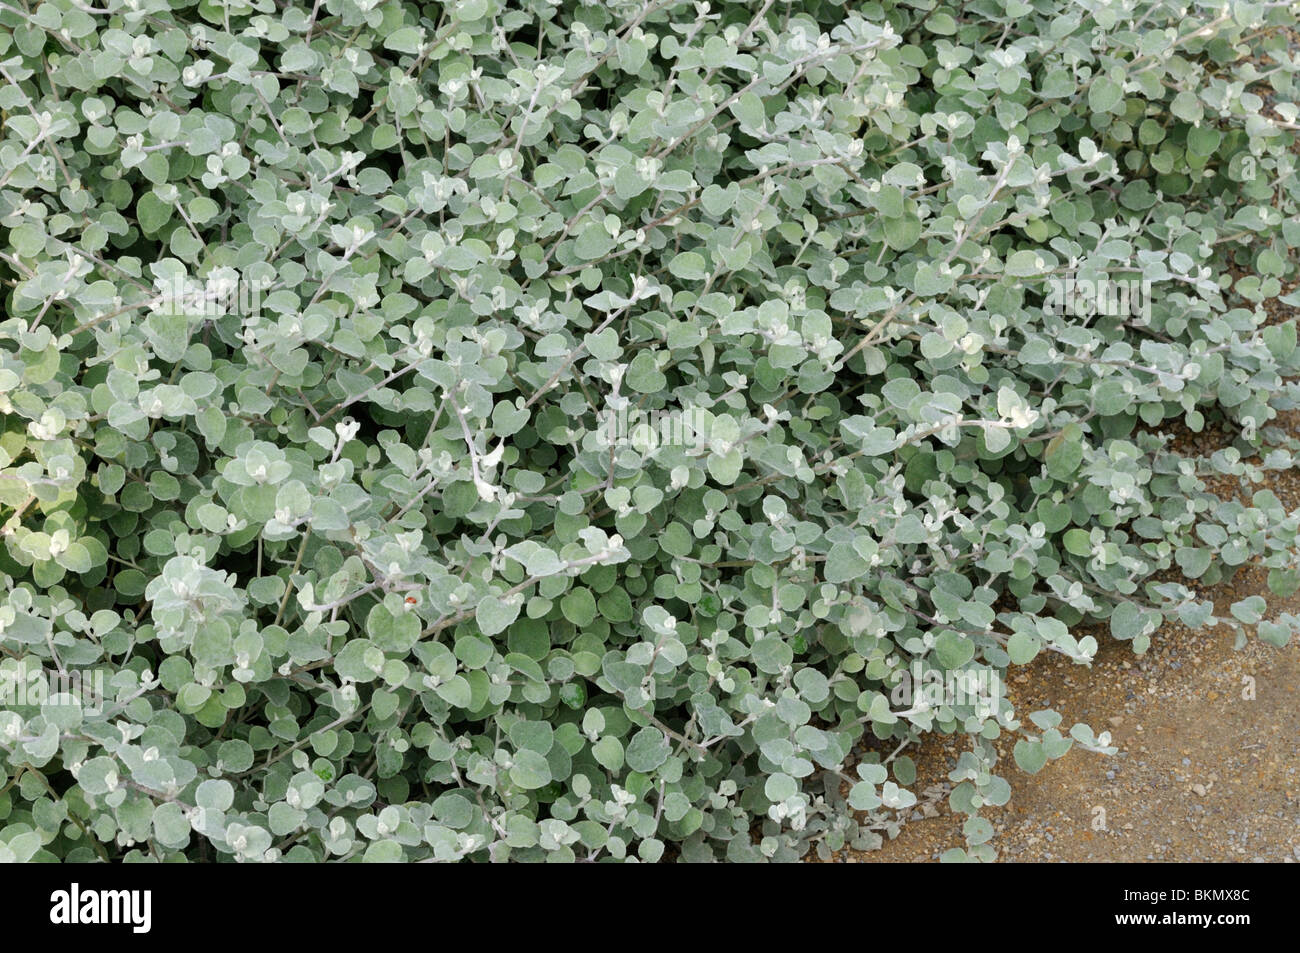 Silver bush everlasting (Helichrysum petiolare) Stock Photo